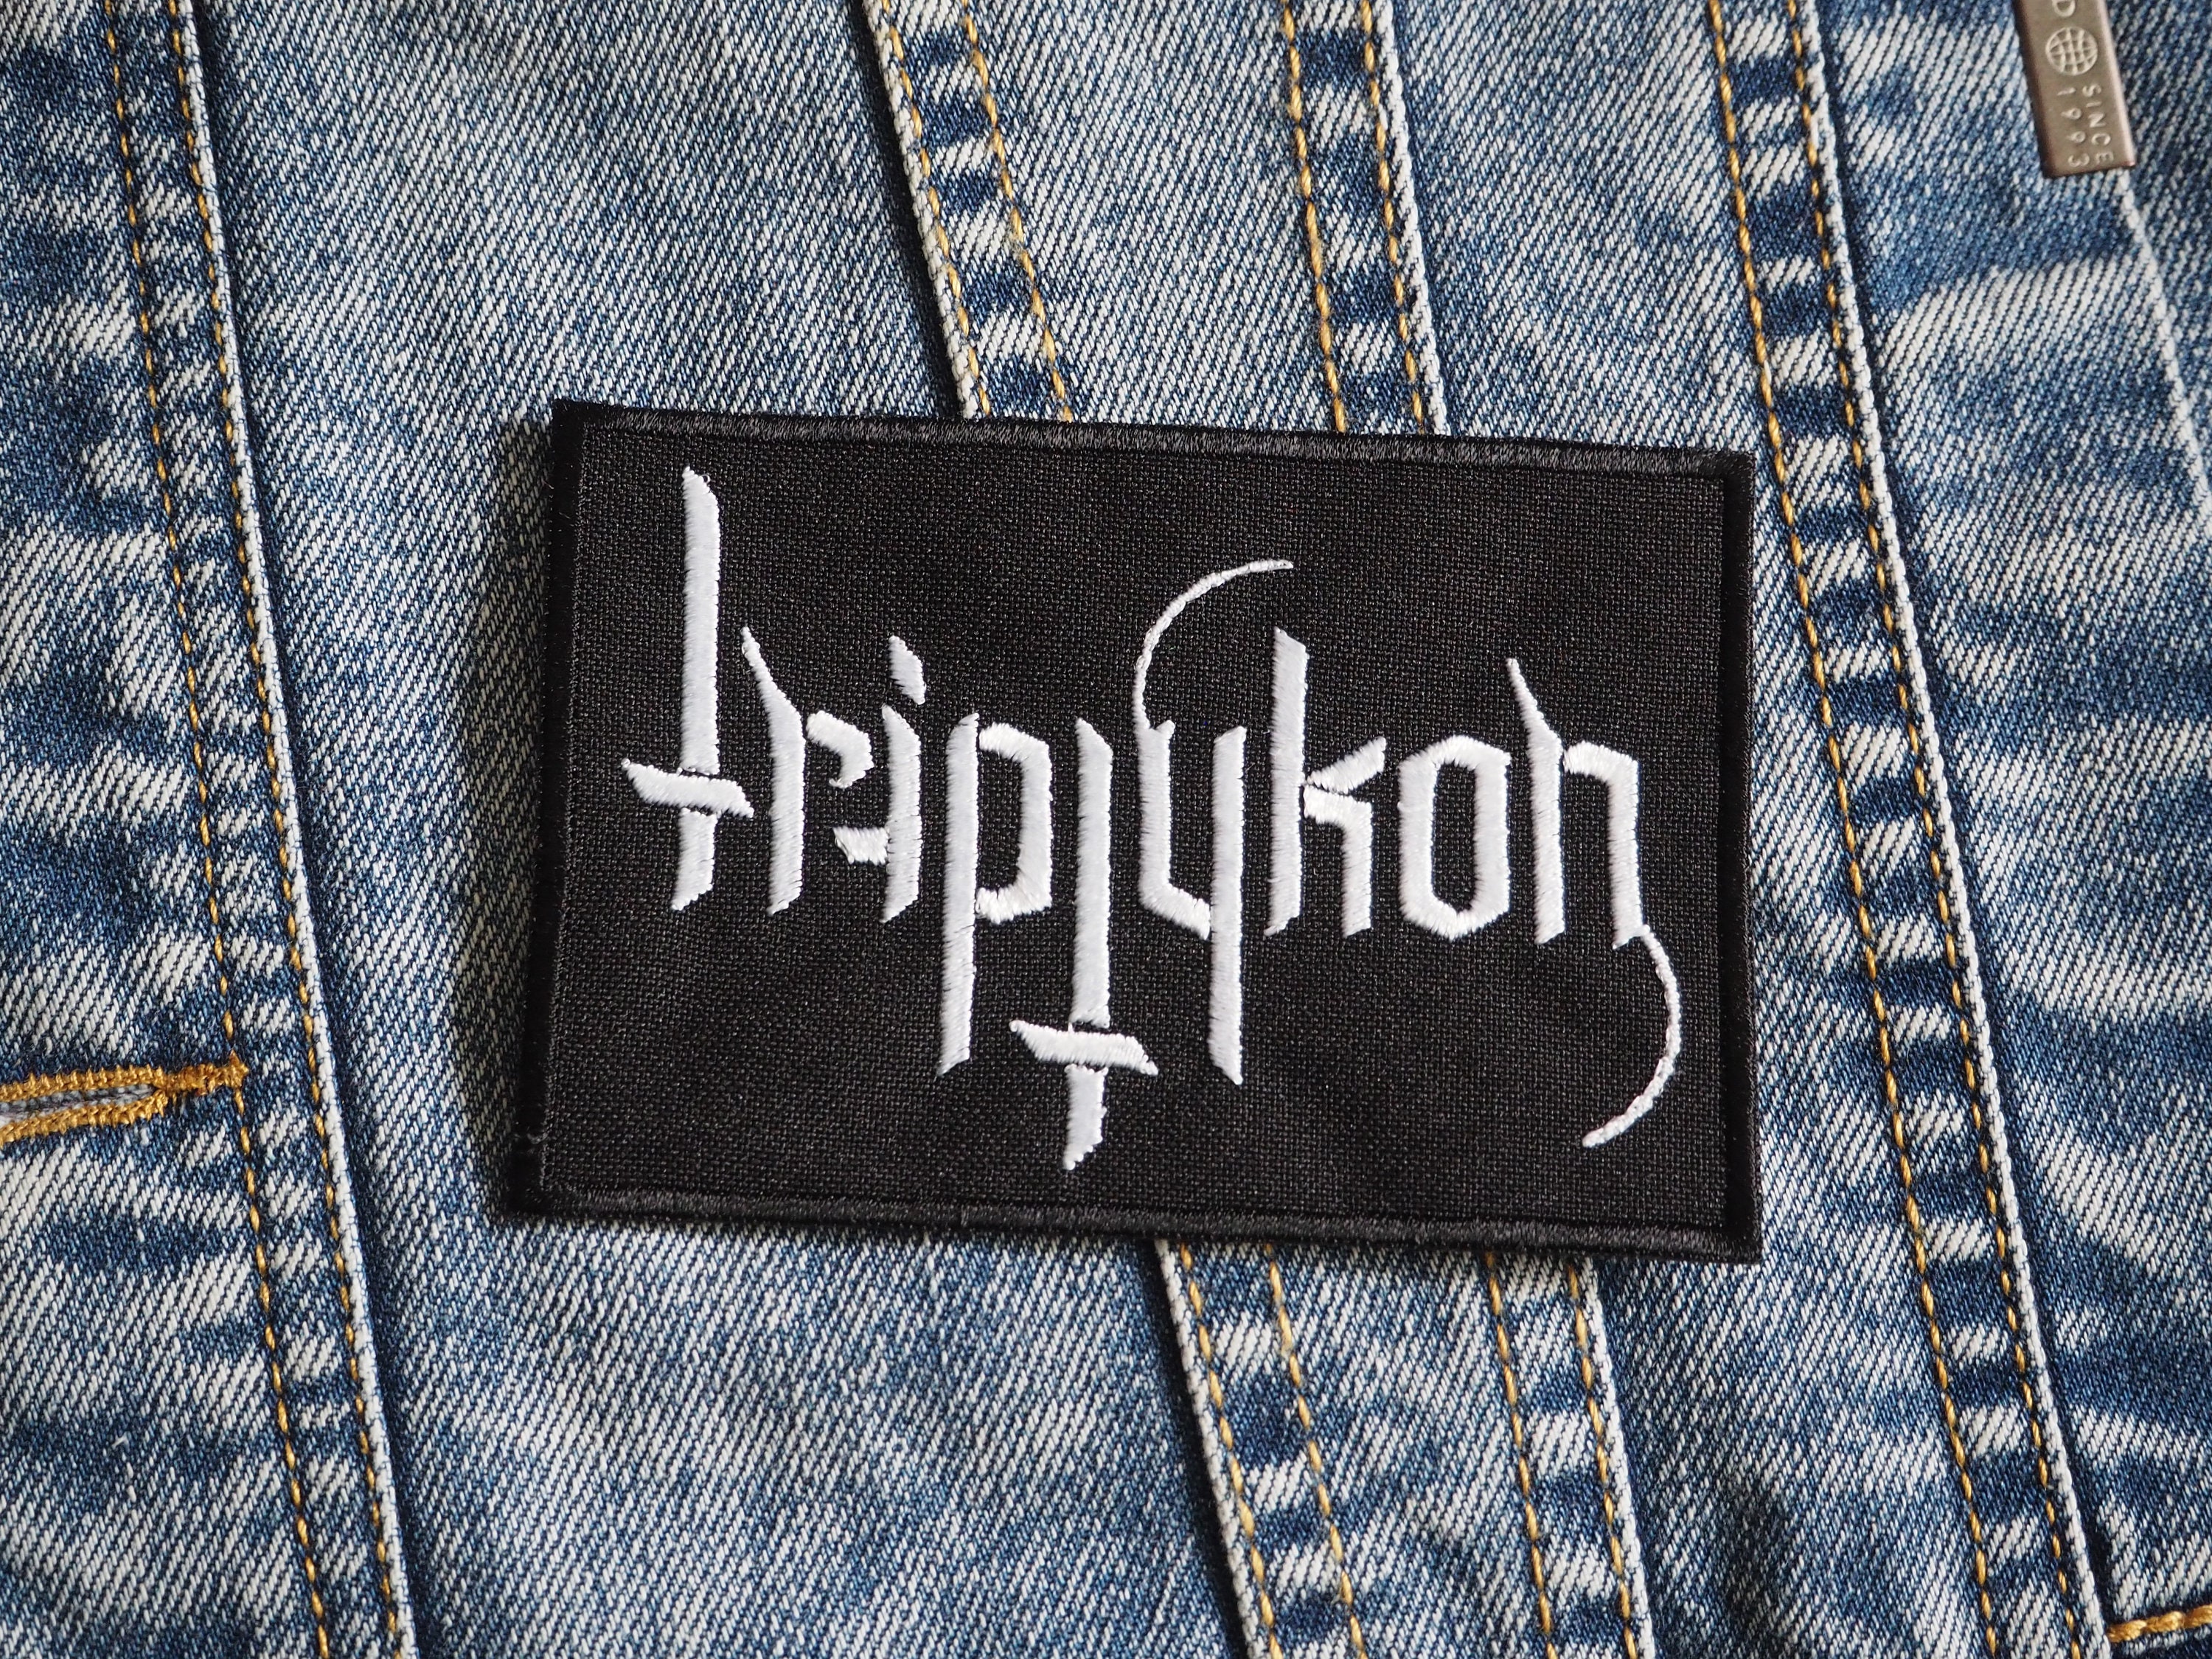 Triptykon Black Metal Death Band Patch Badge Embroidered Iron on Applique Souvenir Accessory